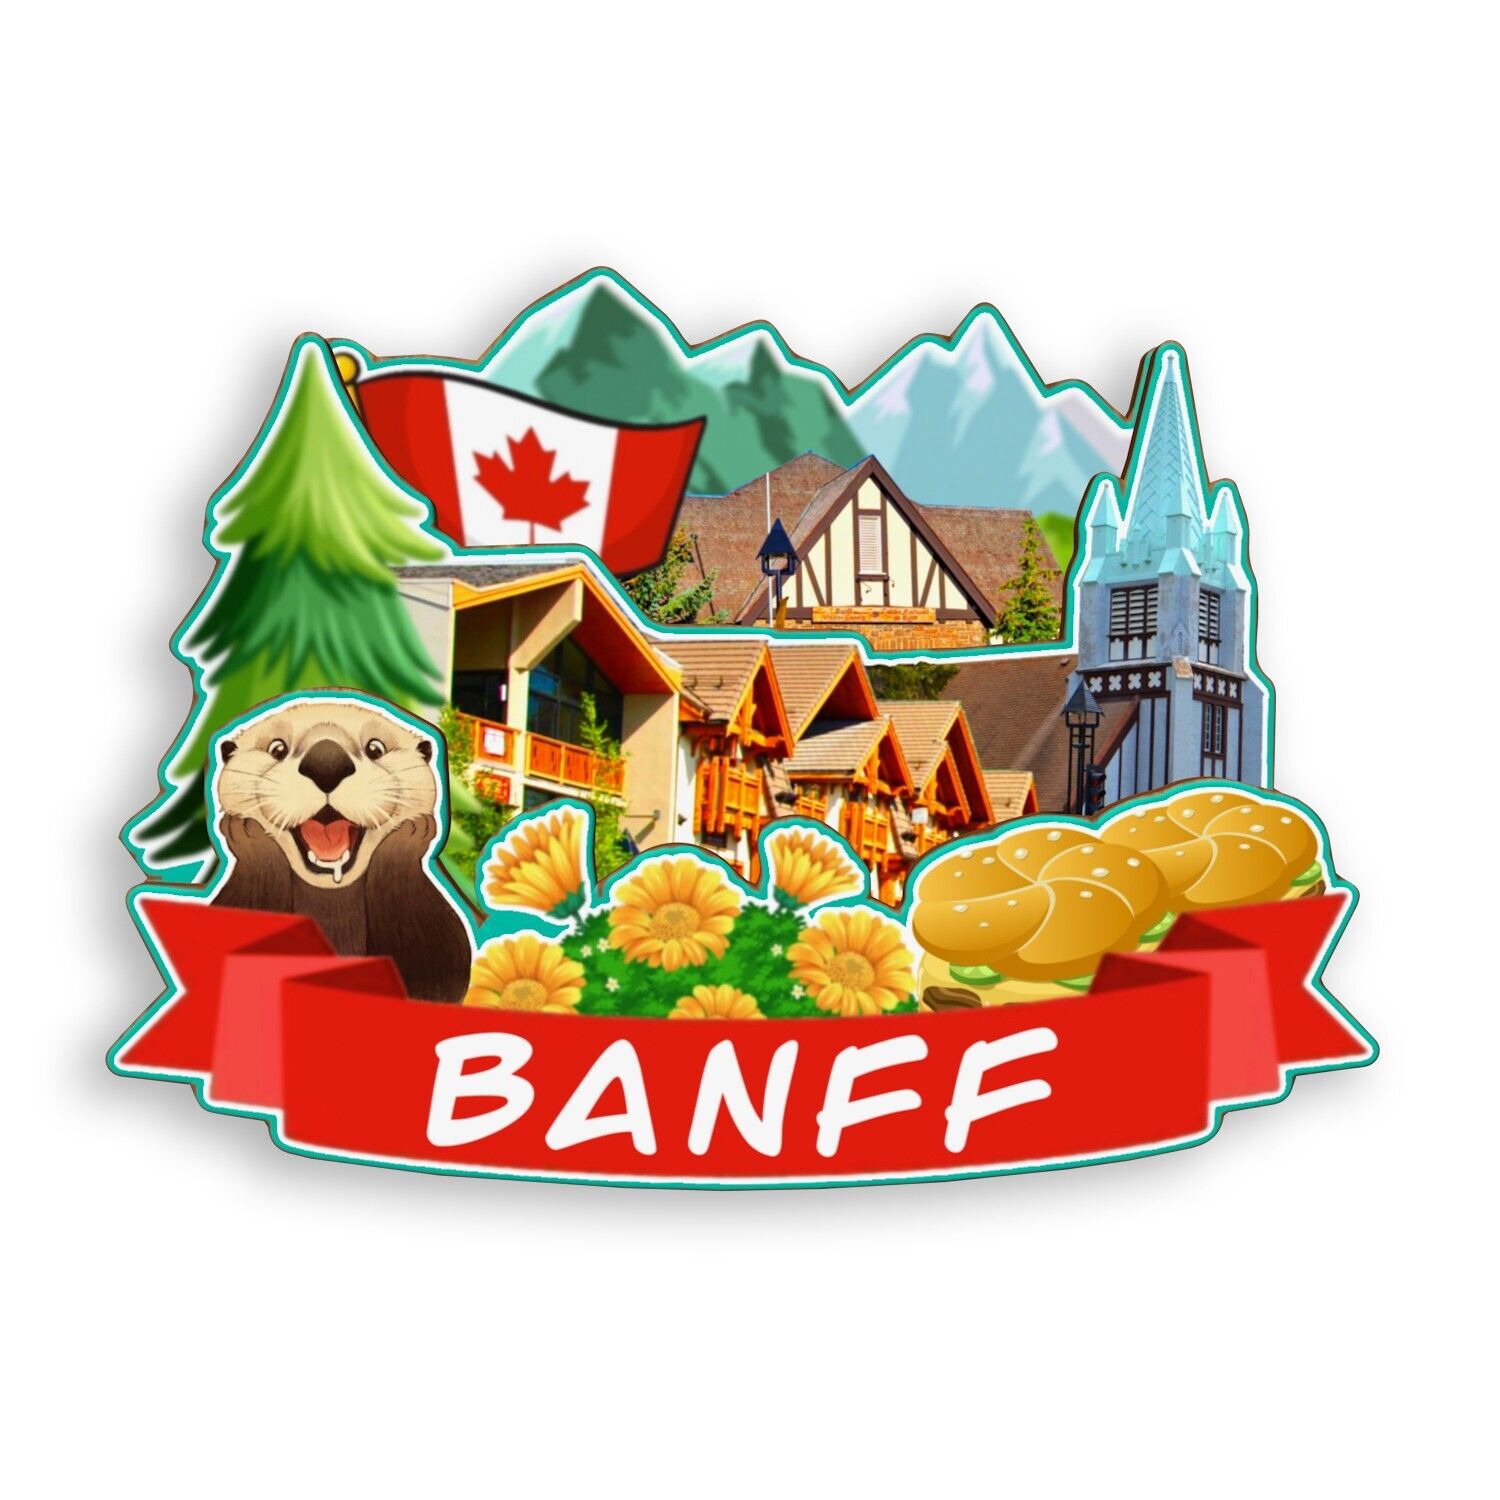 Banff Canada Refrigerator magnet 3D travel souvenirs wood craft gifts